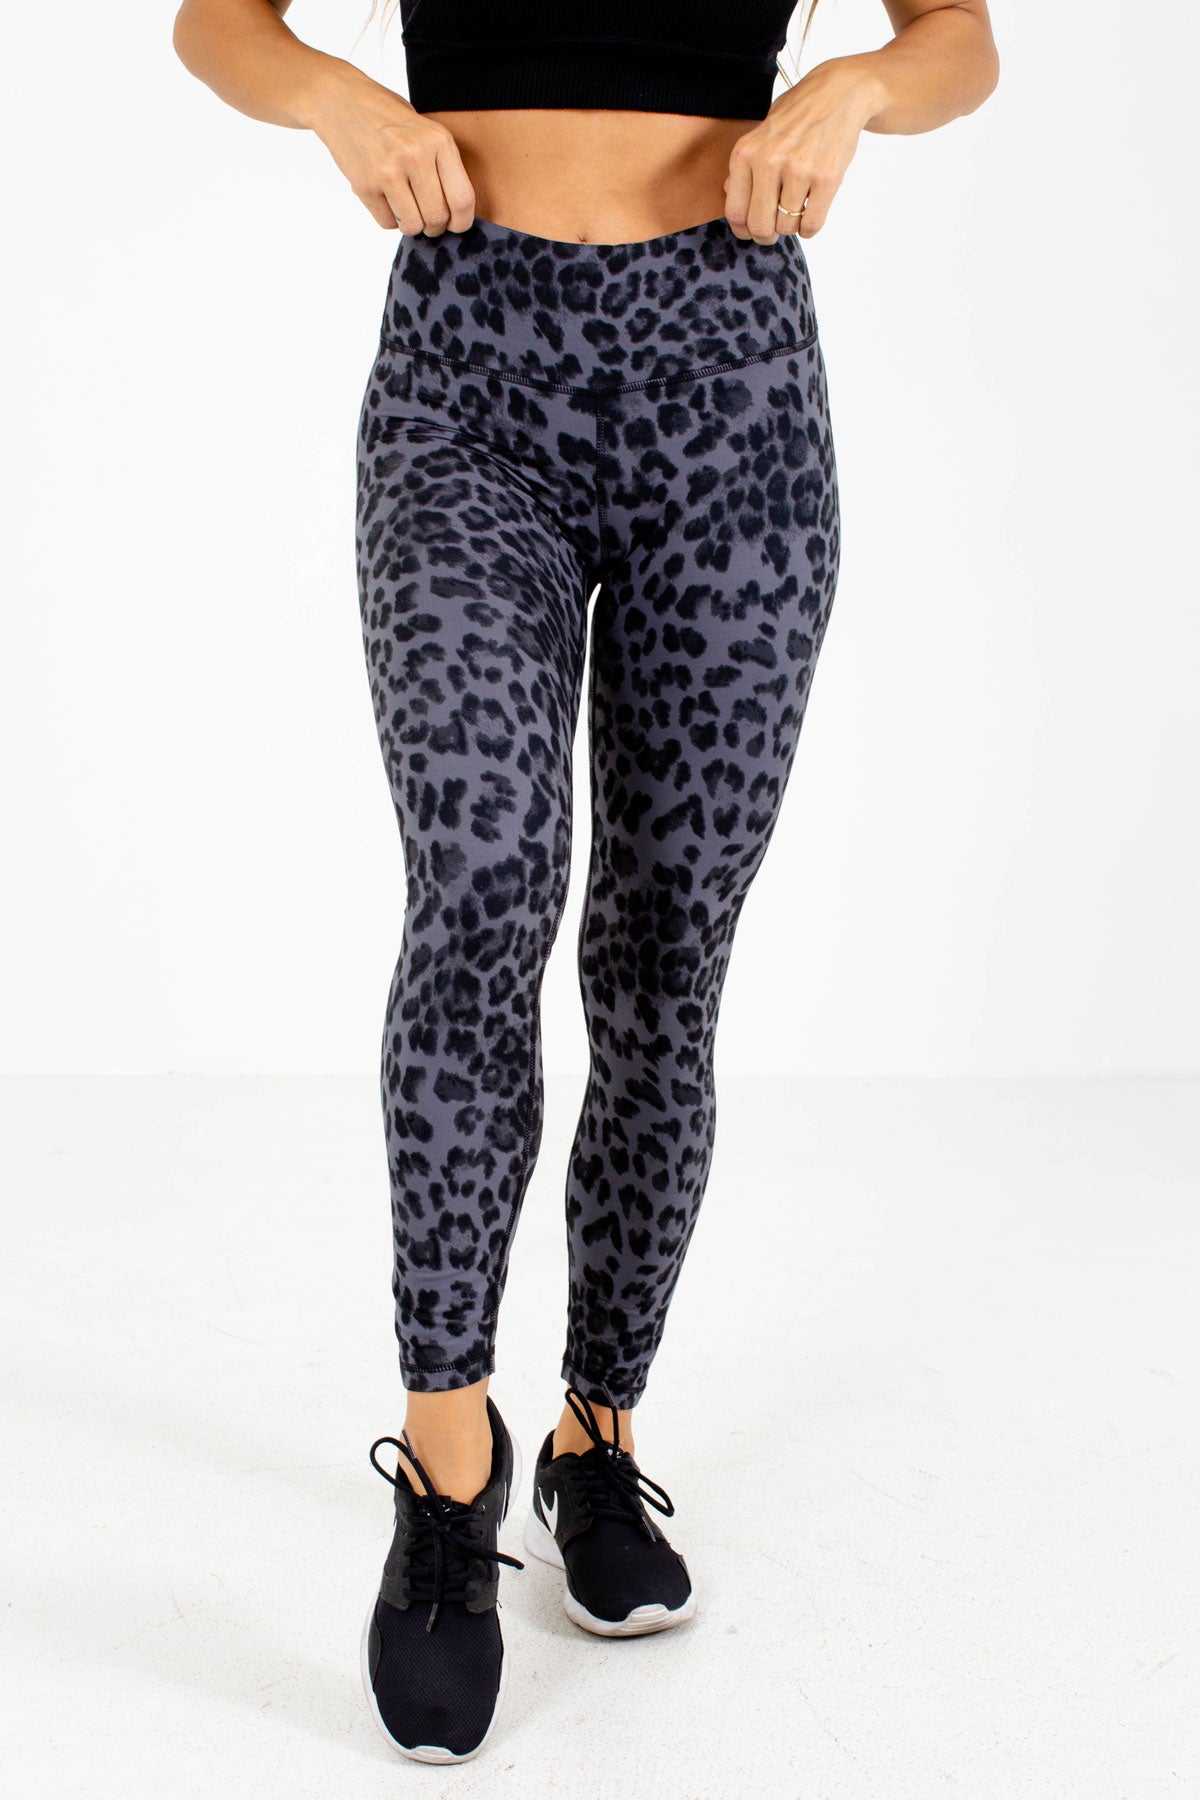 Women's Classic Leopard Print Leggings 